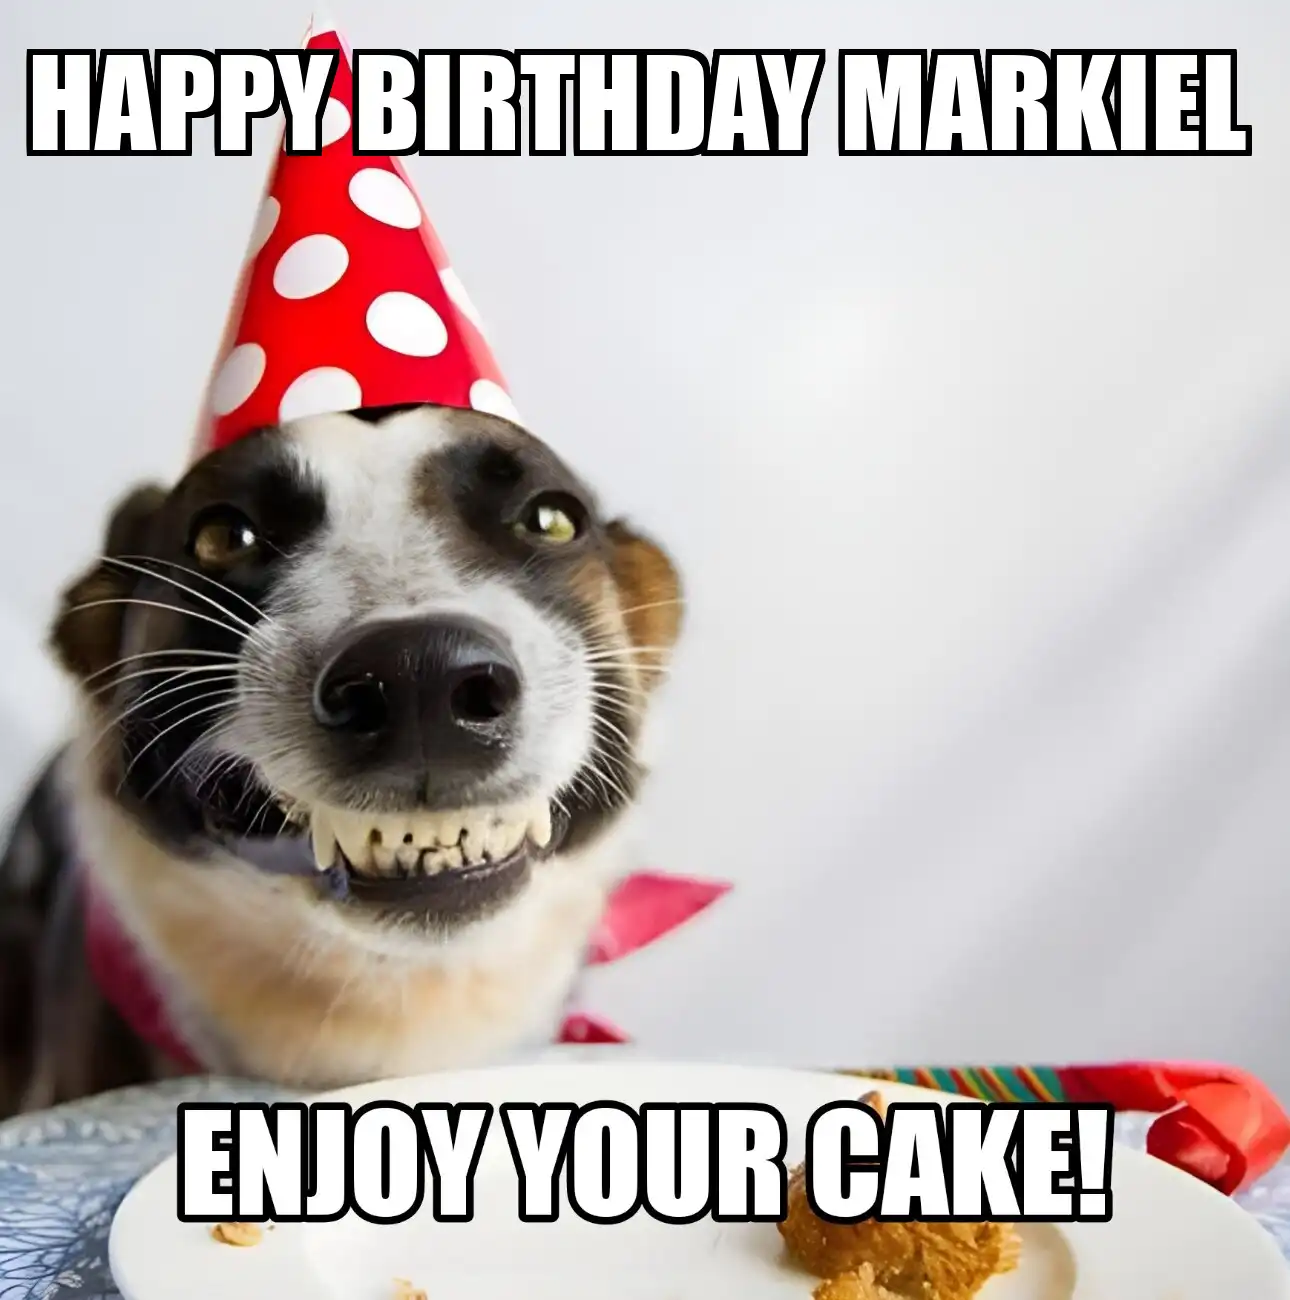 Happy Birthday Markiel Enjoy Your Cake Dog Meme